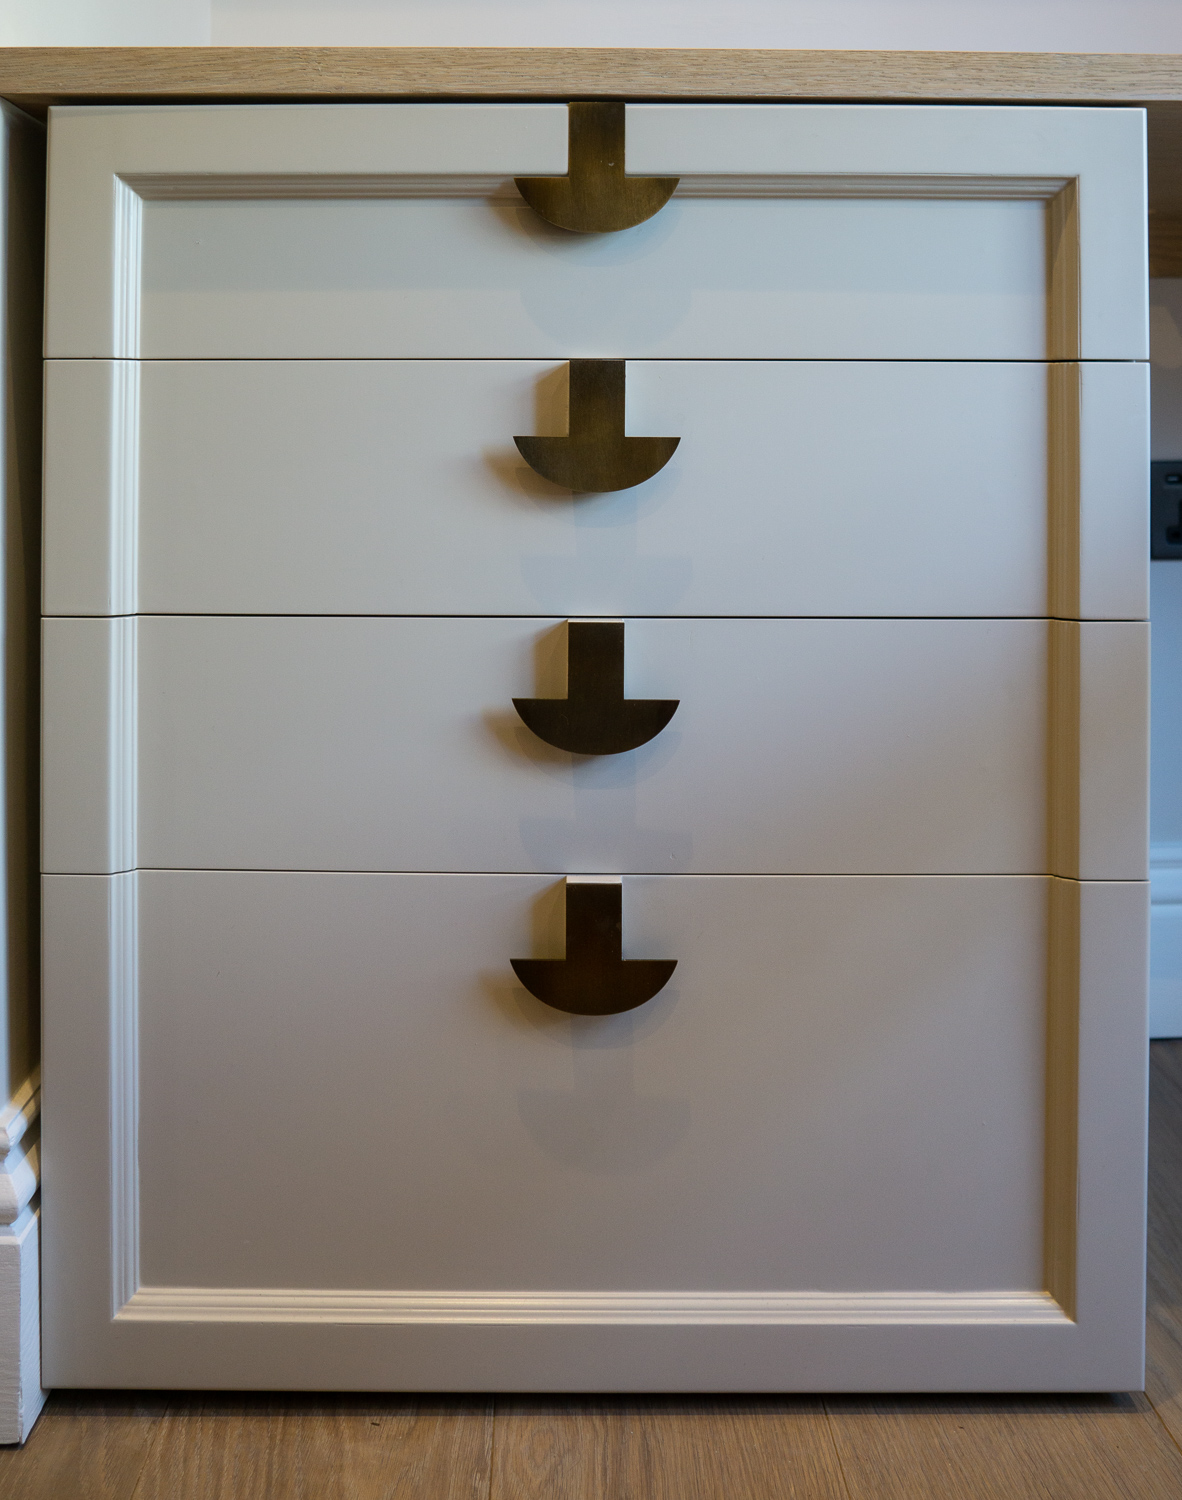 Under desk drawers, Made to match cabinet design with custom designed handles.
